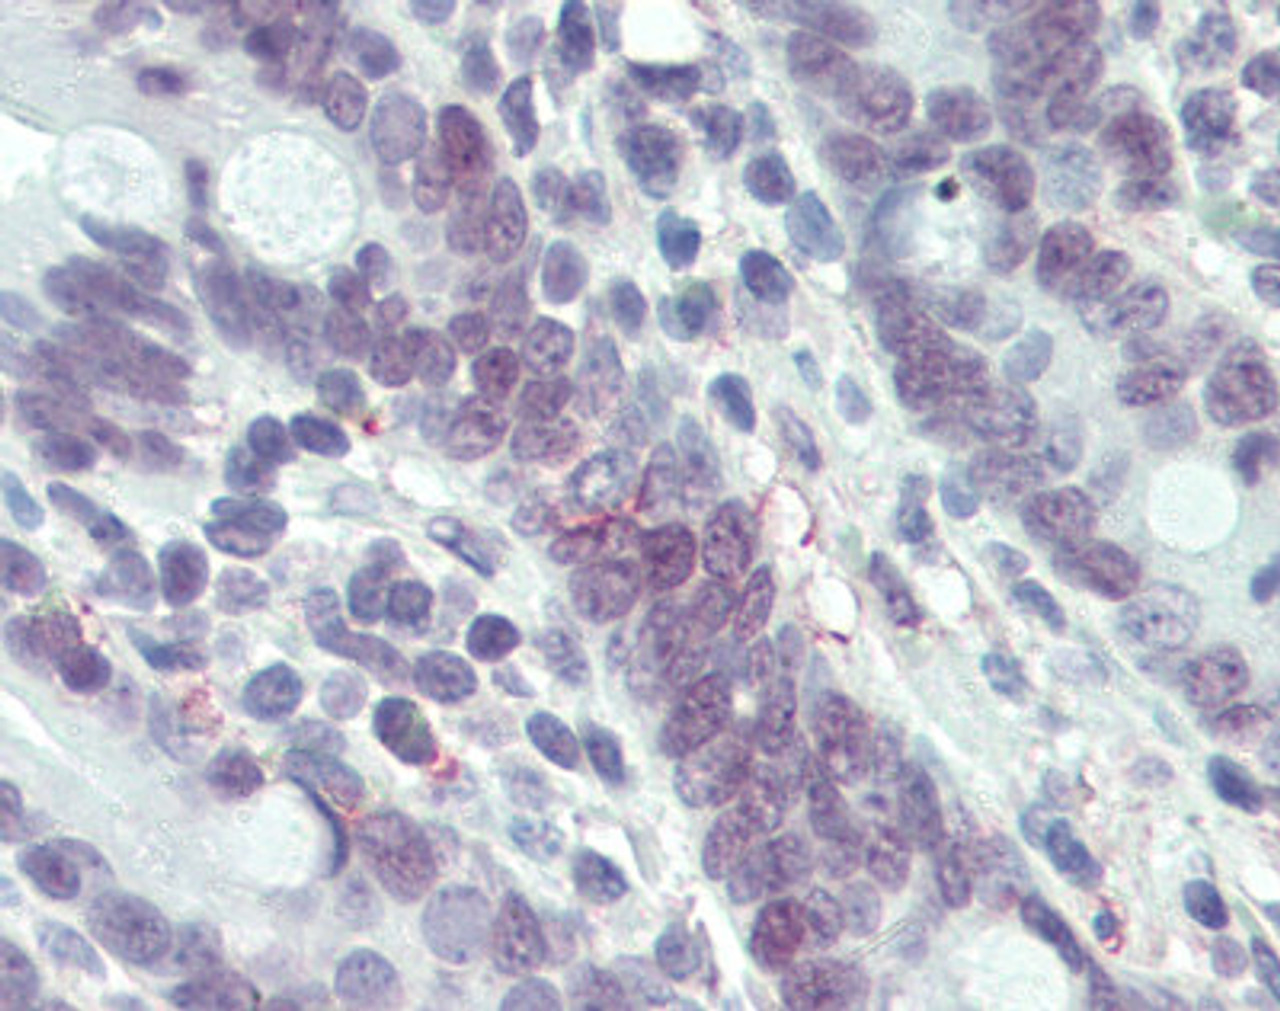 Human small intestine tissue stained with MLH1 Antibody, alkaline phosphatase-streptavidin and chromogen.